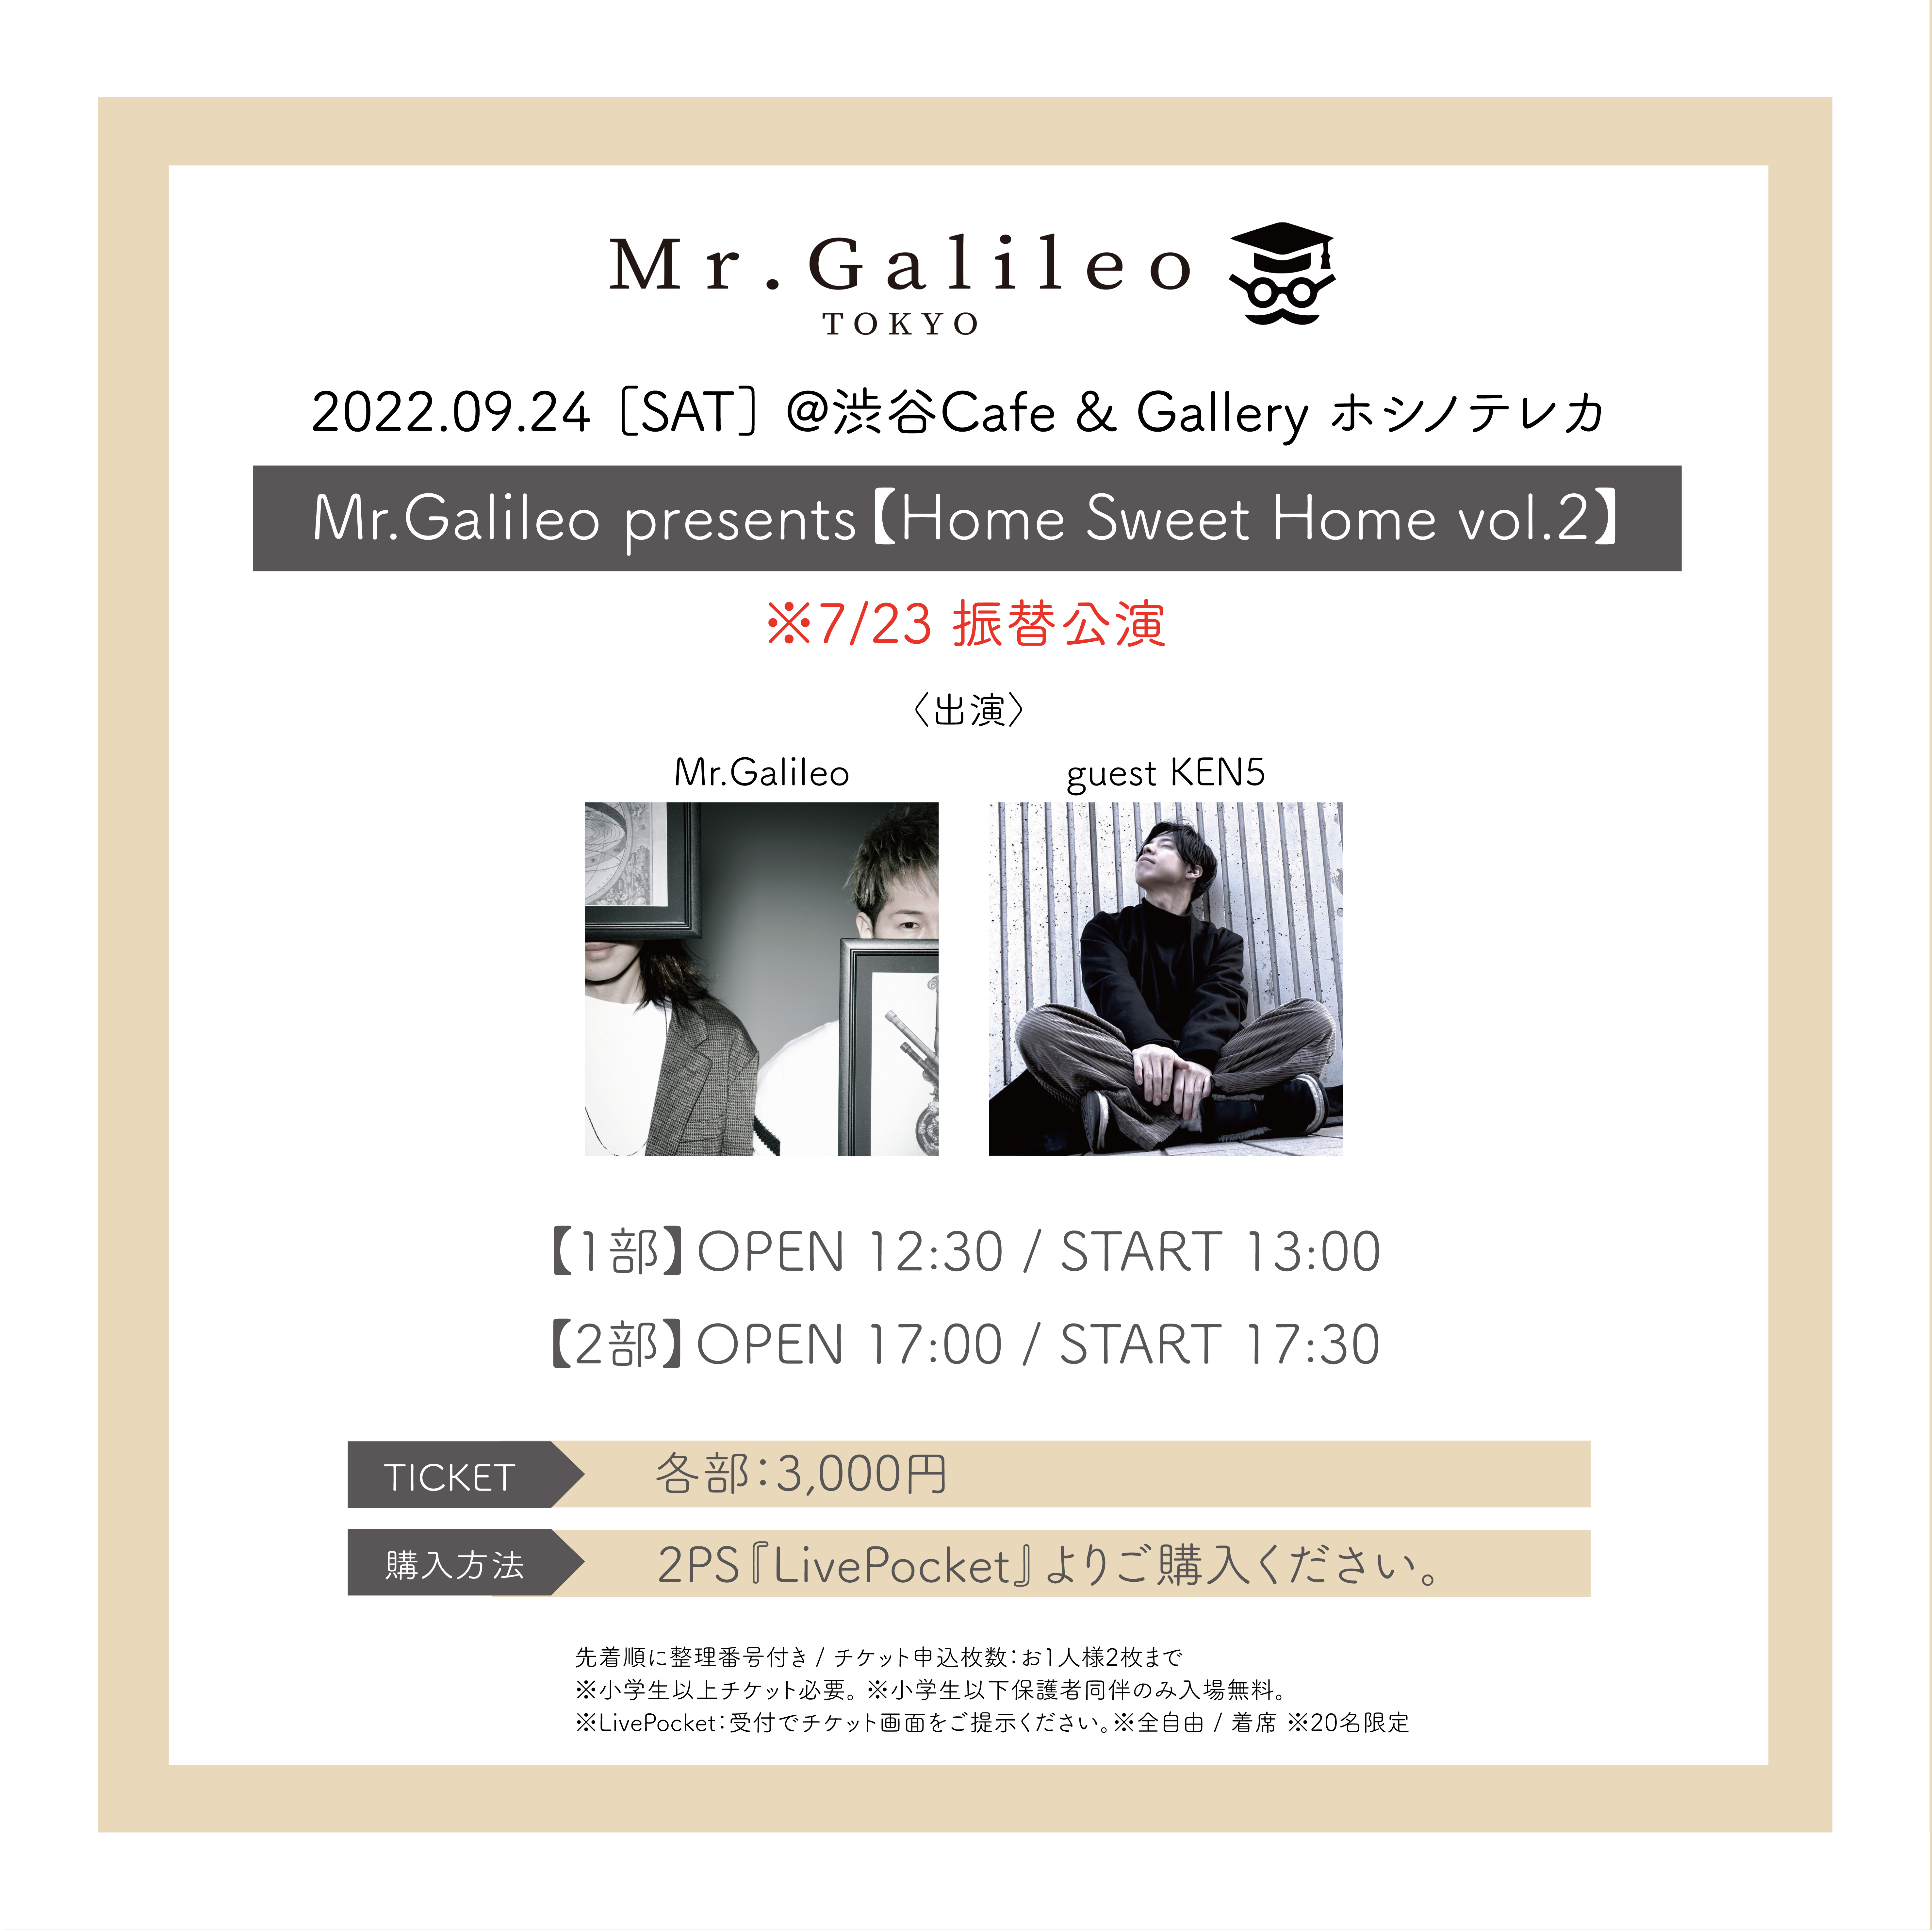 【9/24(sat) 1部】Mr.Galileo presents 【Home Sweet Home vol.2】